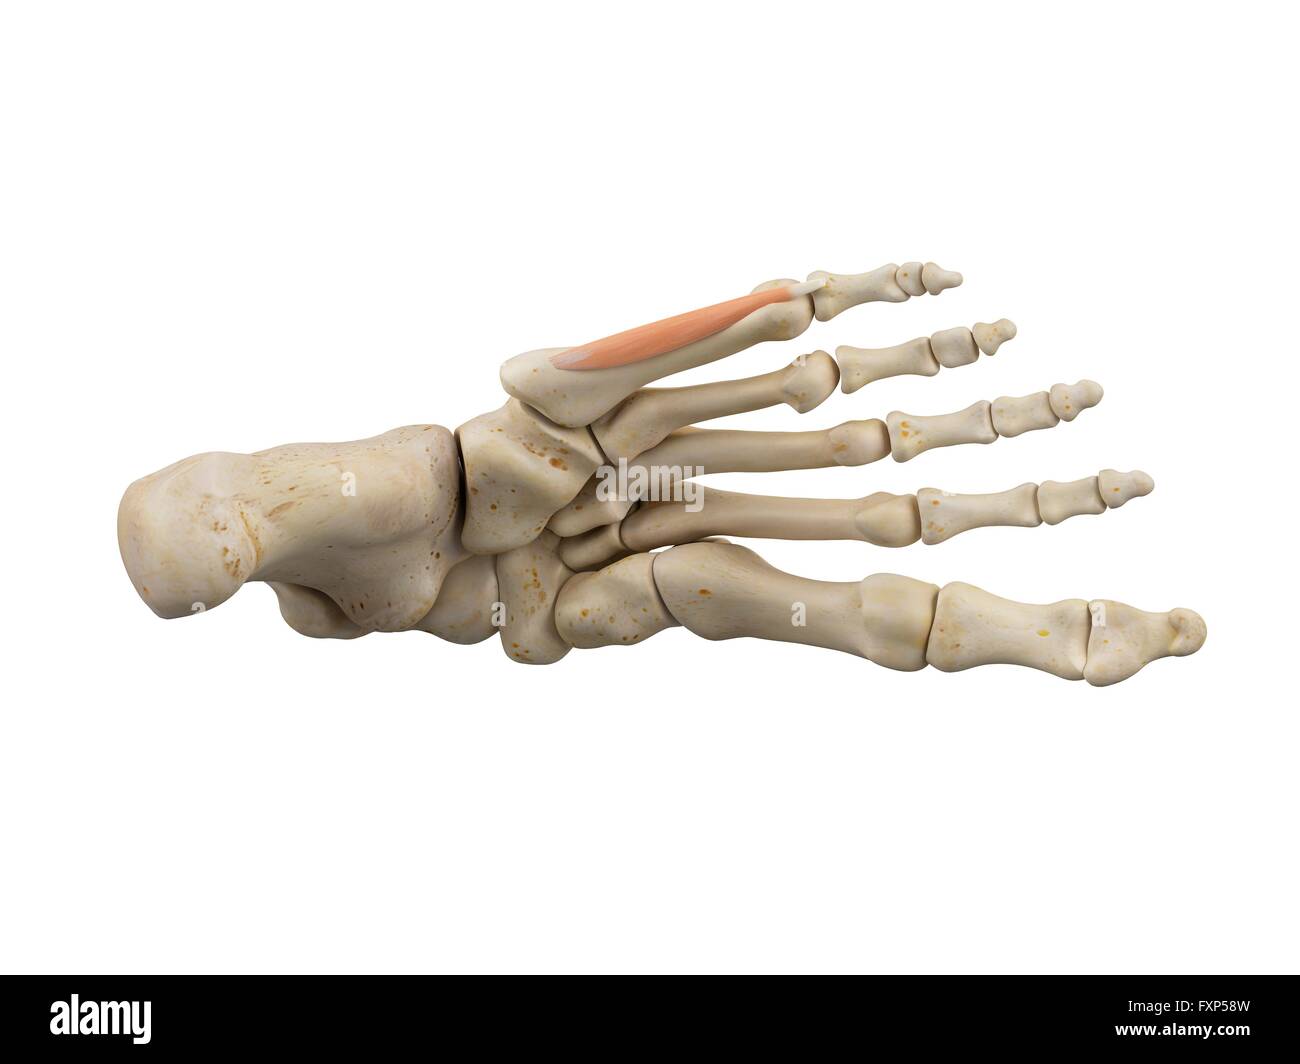 Human foot muscles, computer illustration. Stock Photo